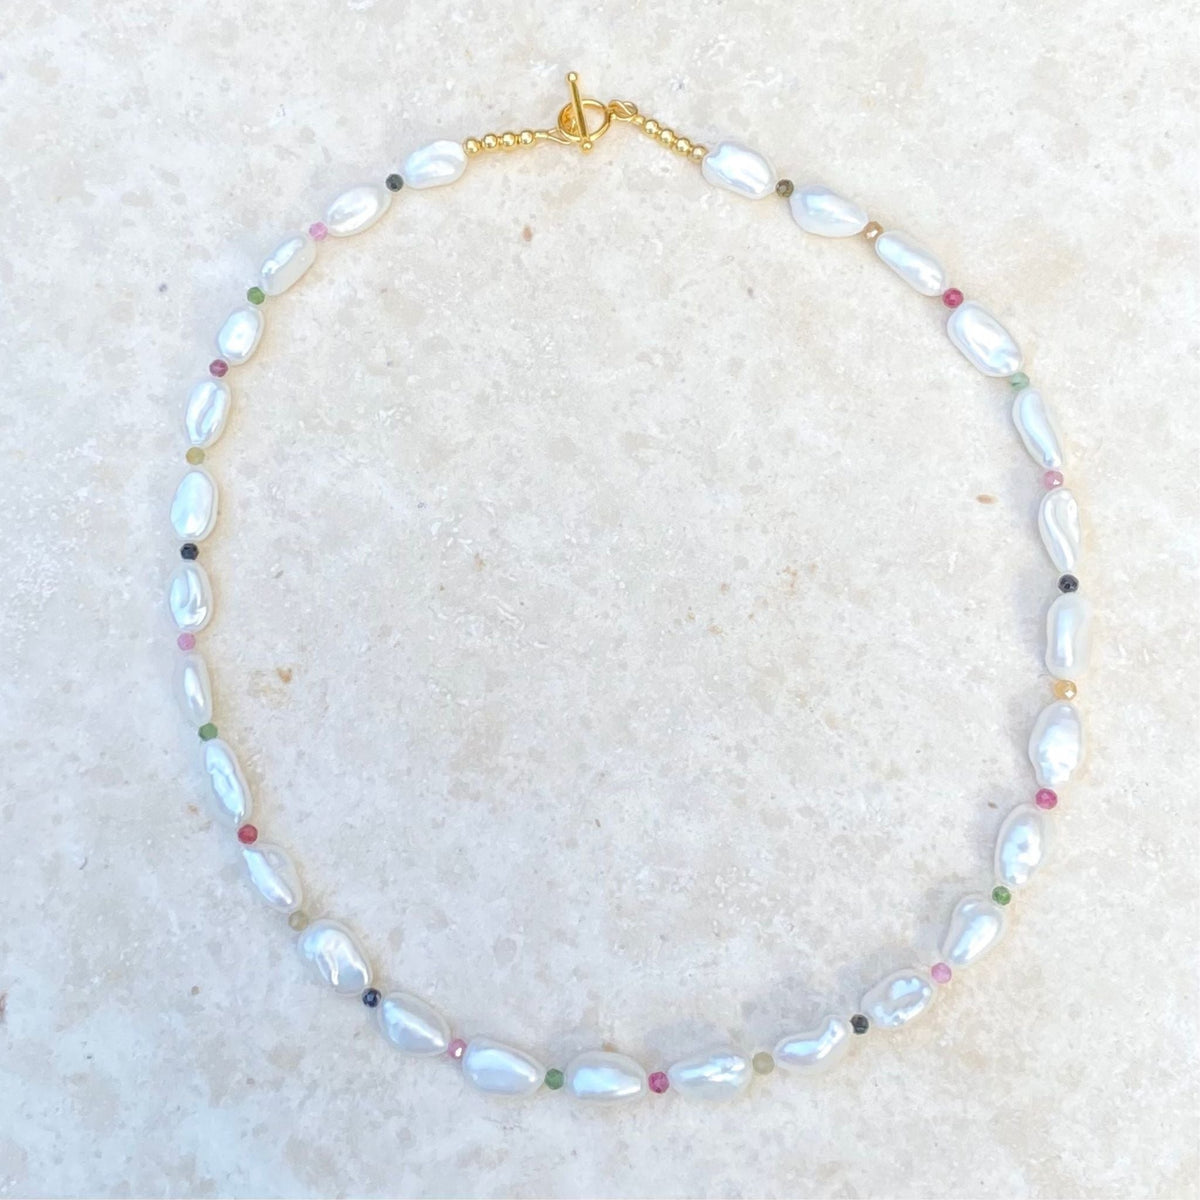 Tivoli Pearl Choker - Freshwater Pearl Necklace